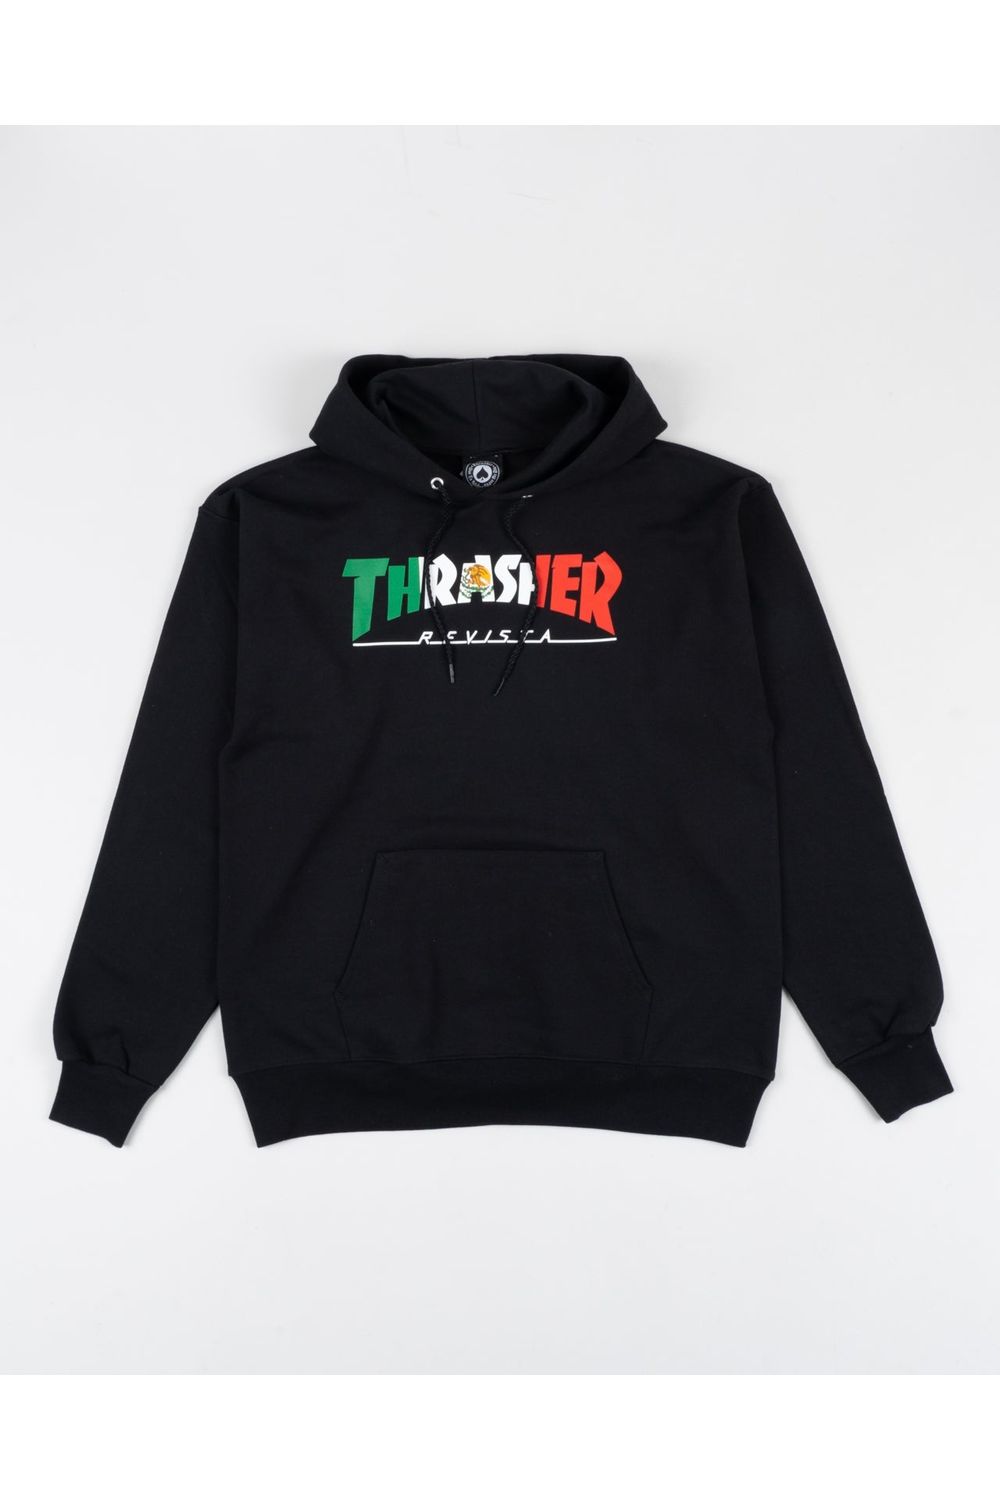 Thrasher Mexico Hood